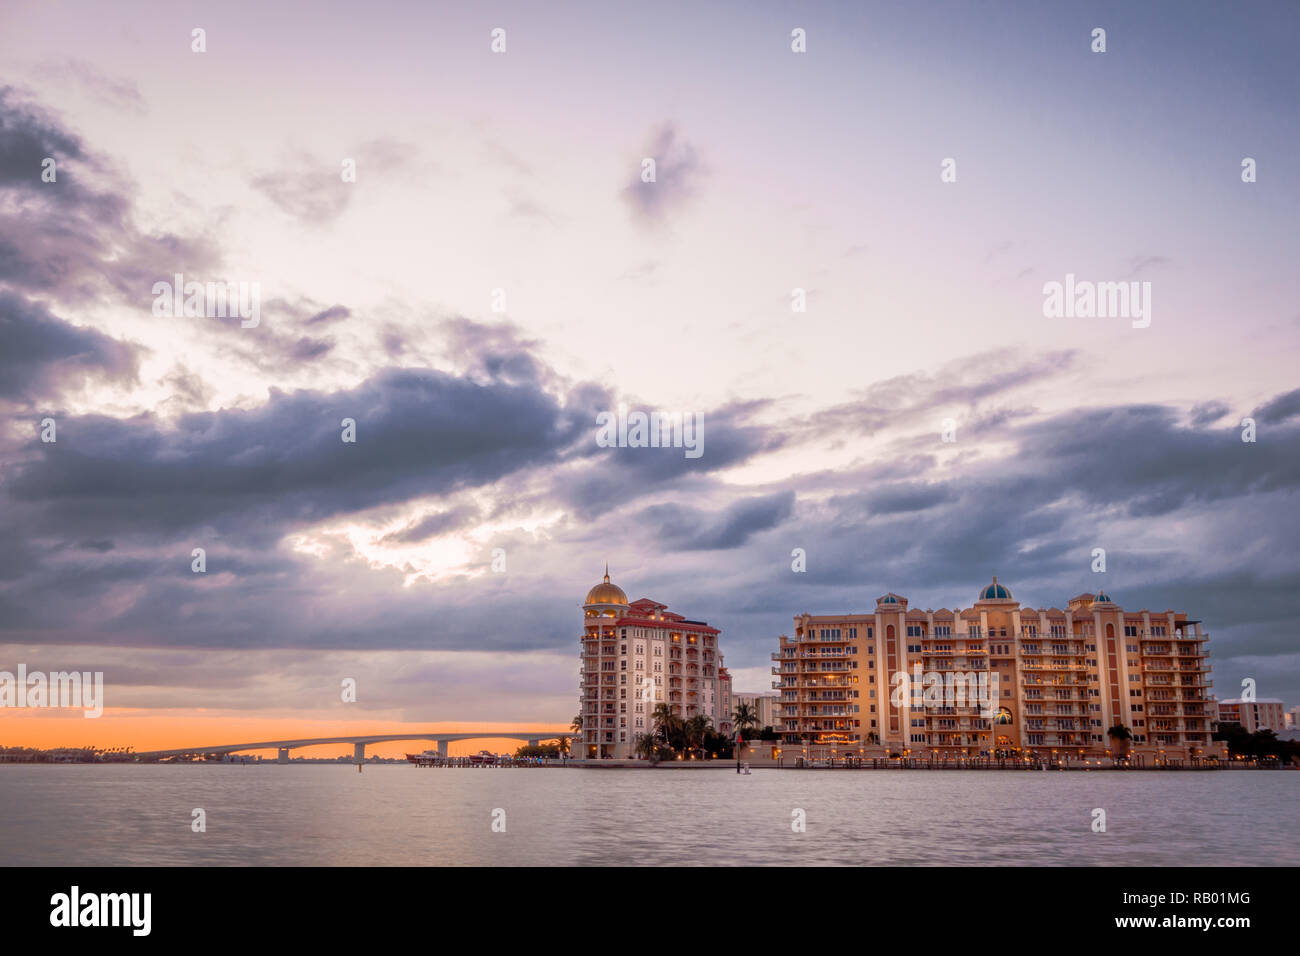 Illuminated cityscape at sunset with dramatic sky in Sarasota, Florida Stock Photo